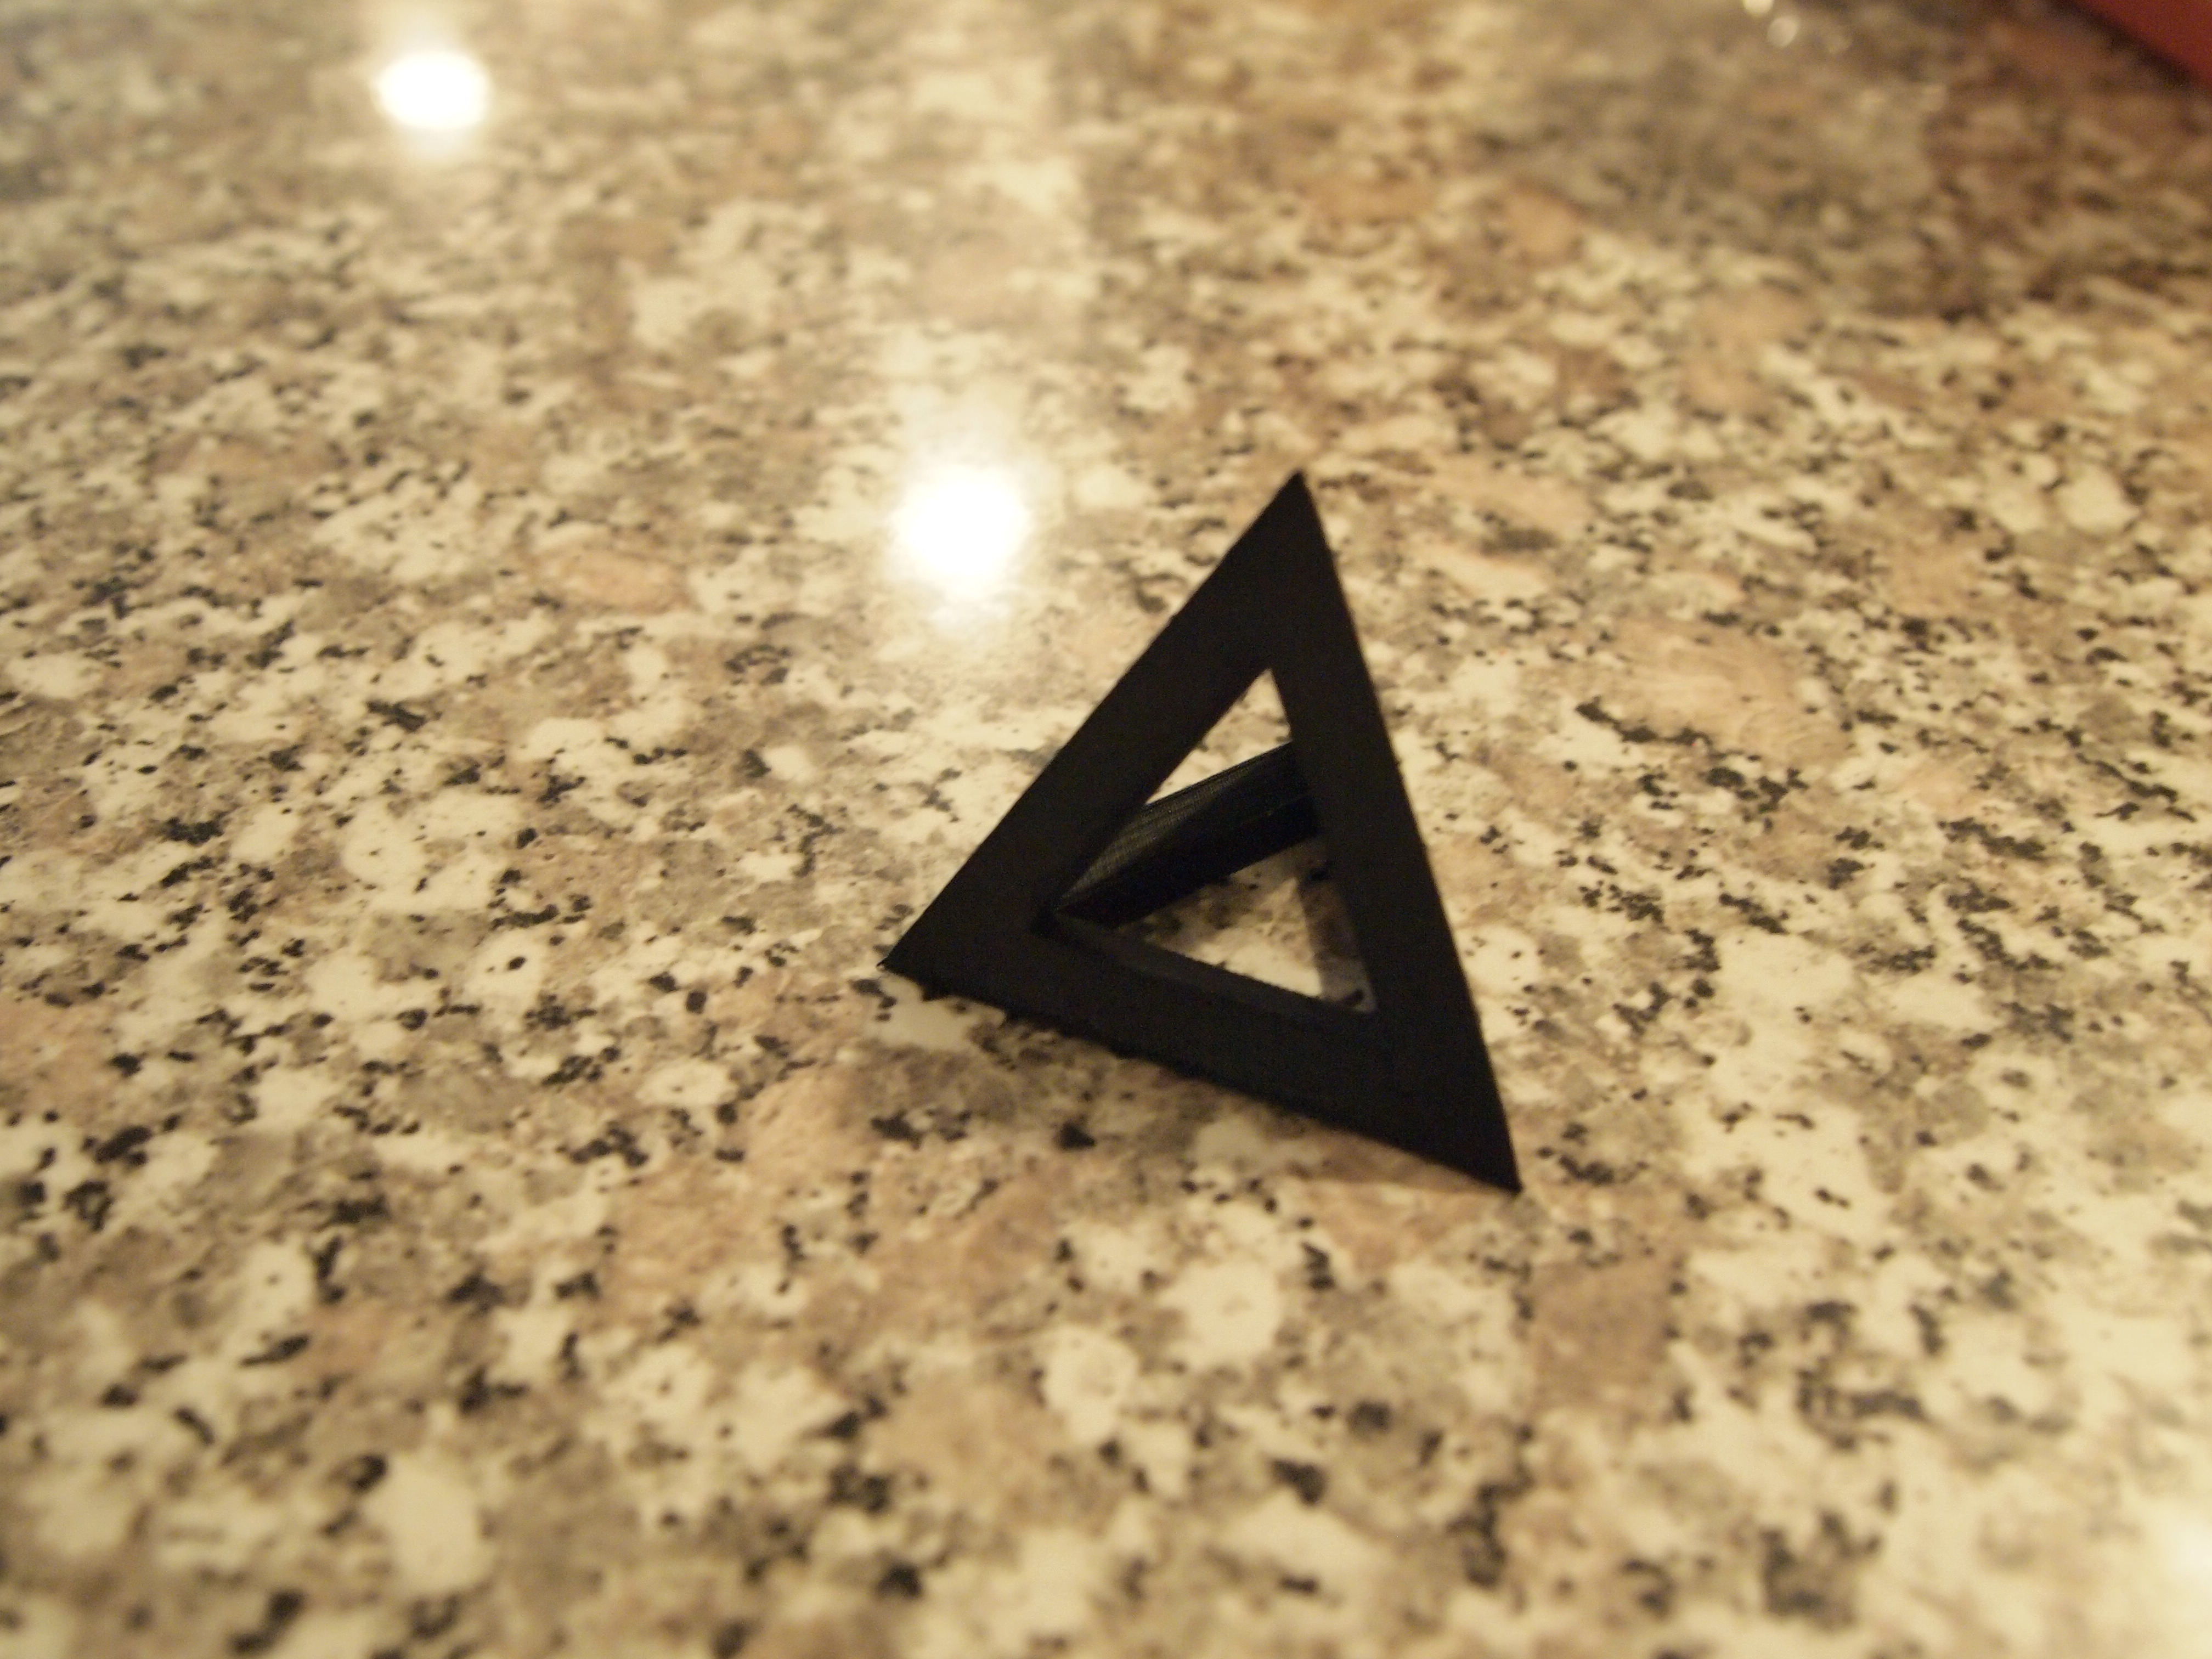 3D Printed Tetrahedron